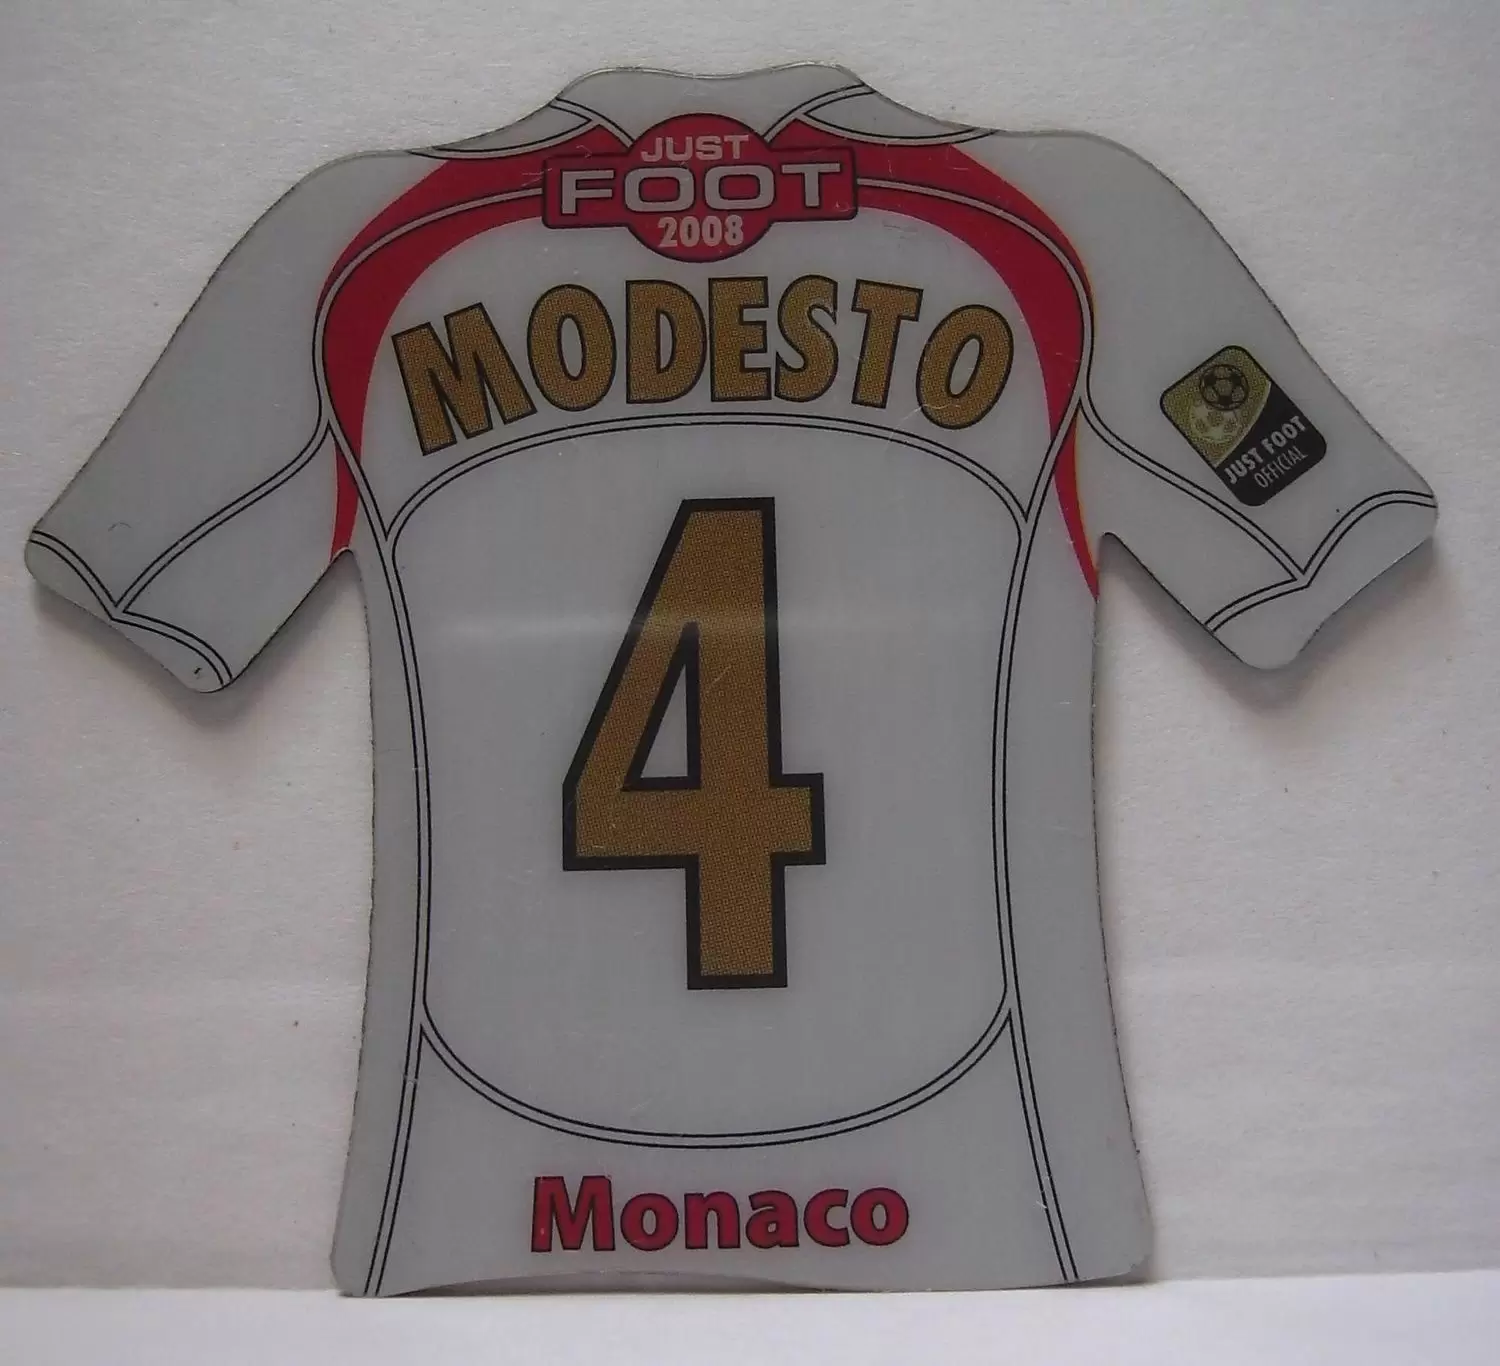 Just Foot 2008 - Monaco 4 - Modesto